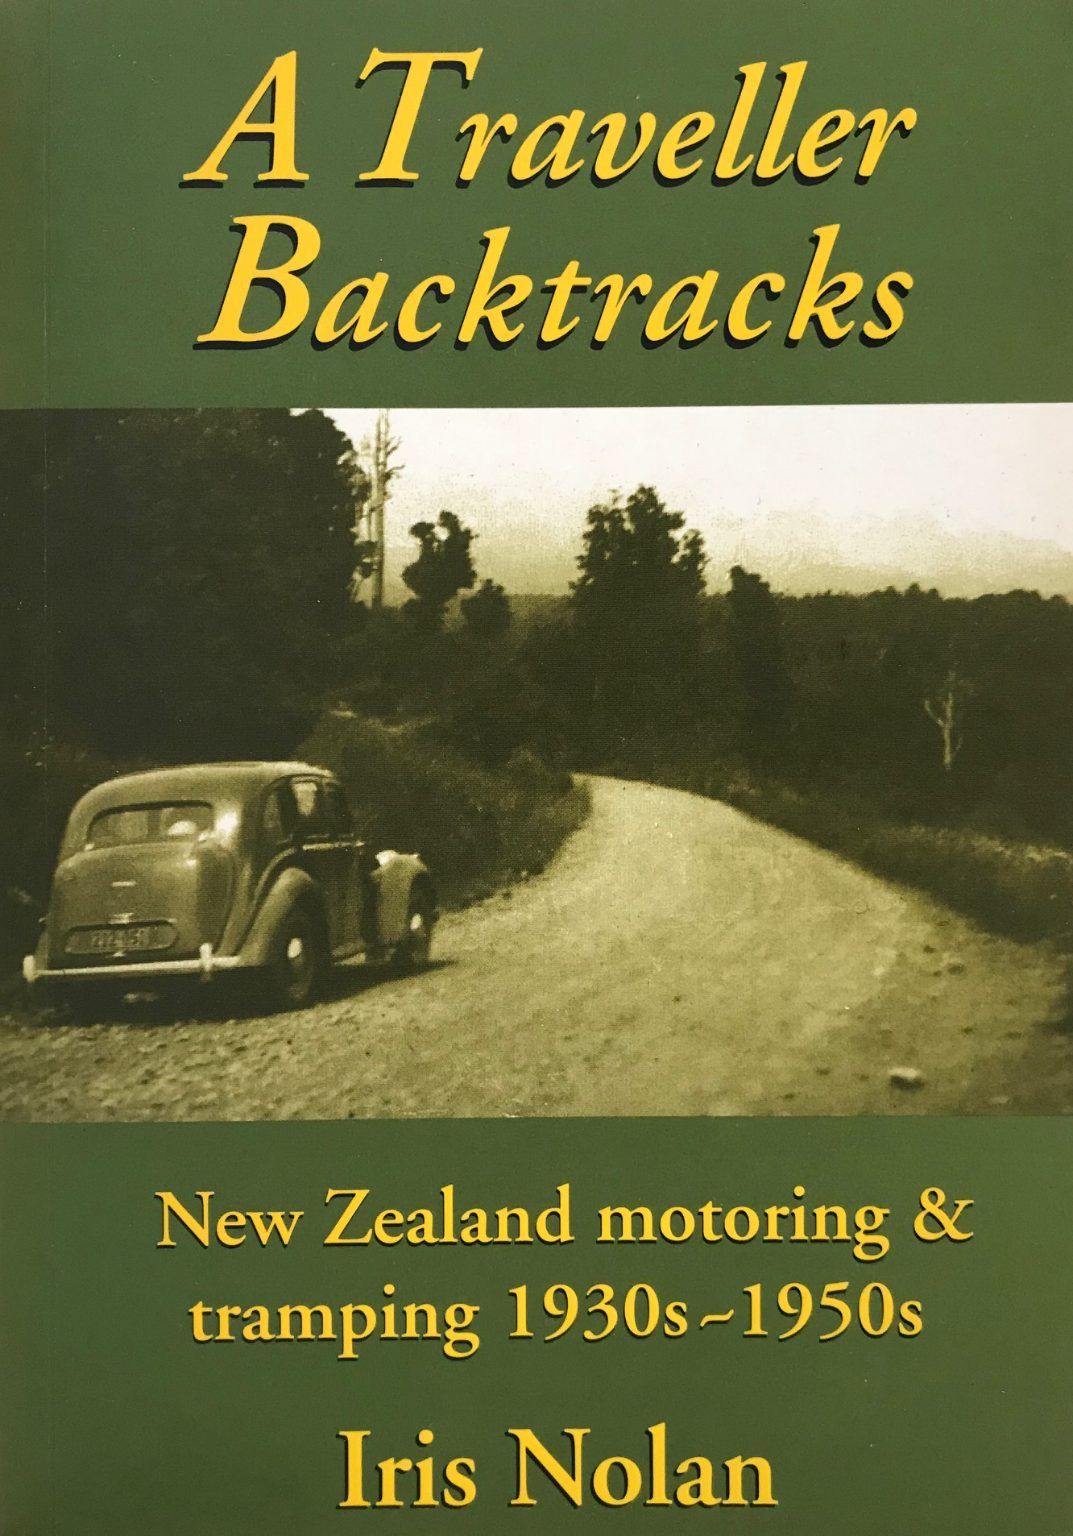 A TRAVELLER BACKTRACKS: New Zealand Motoring & Tramping 1930s-1950s